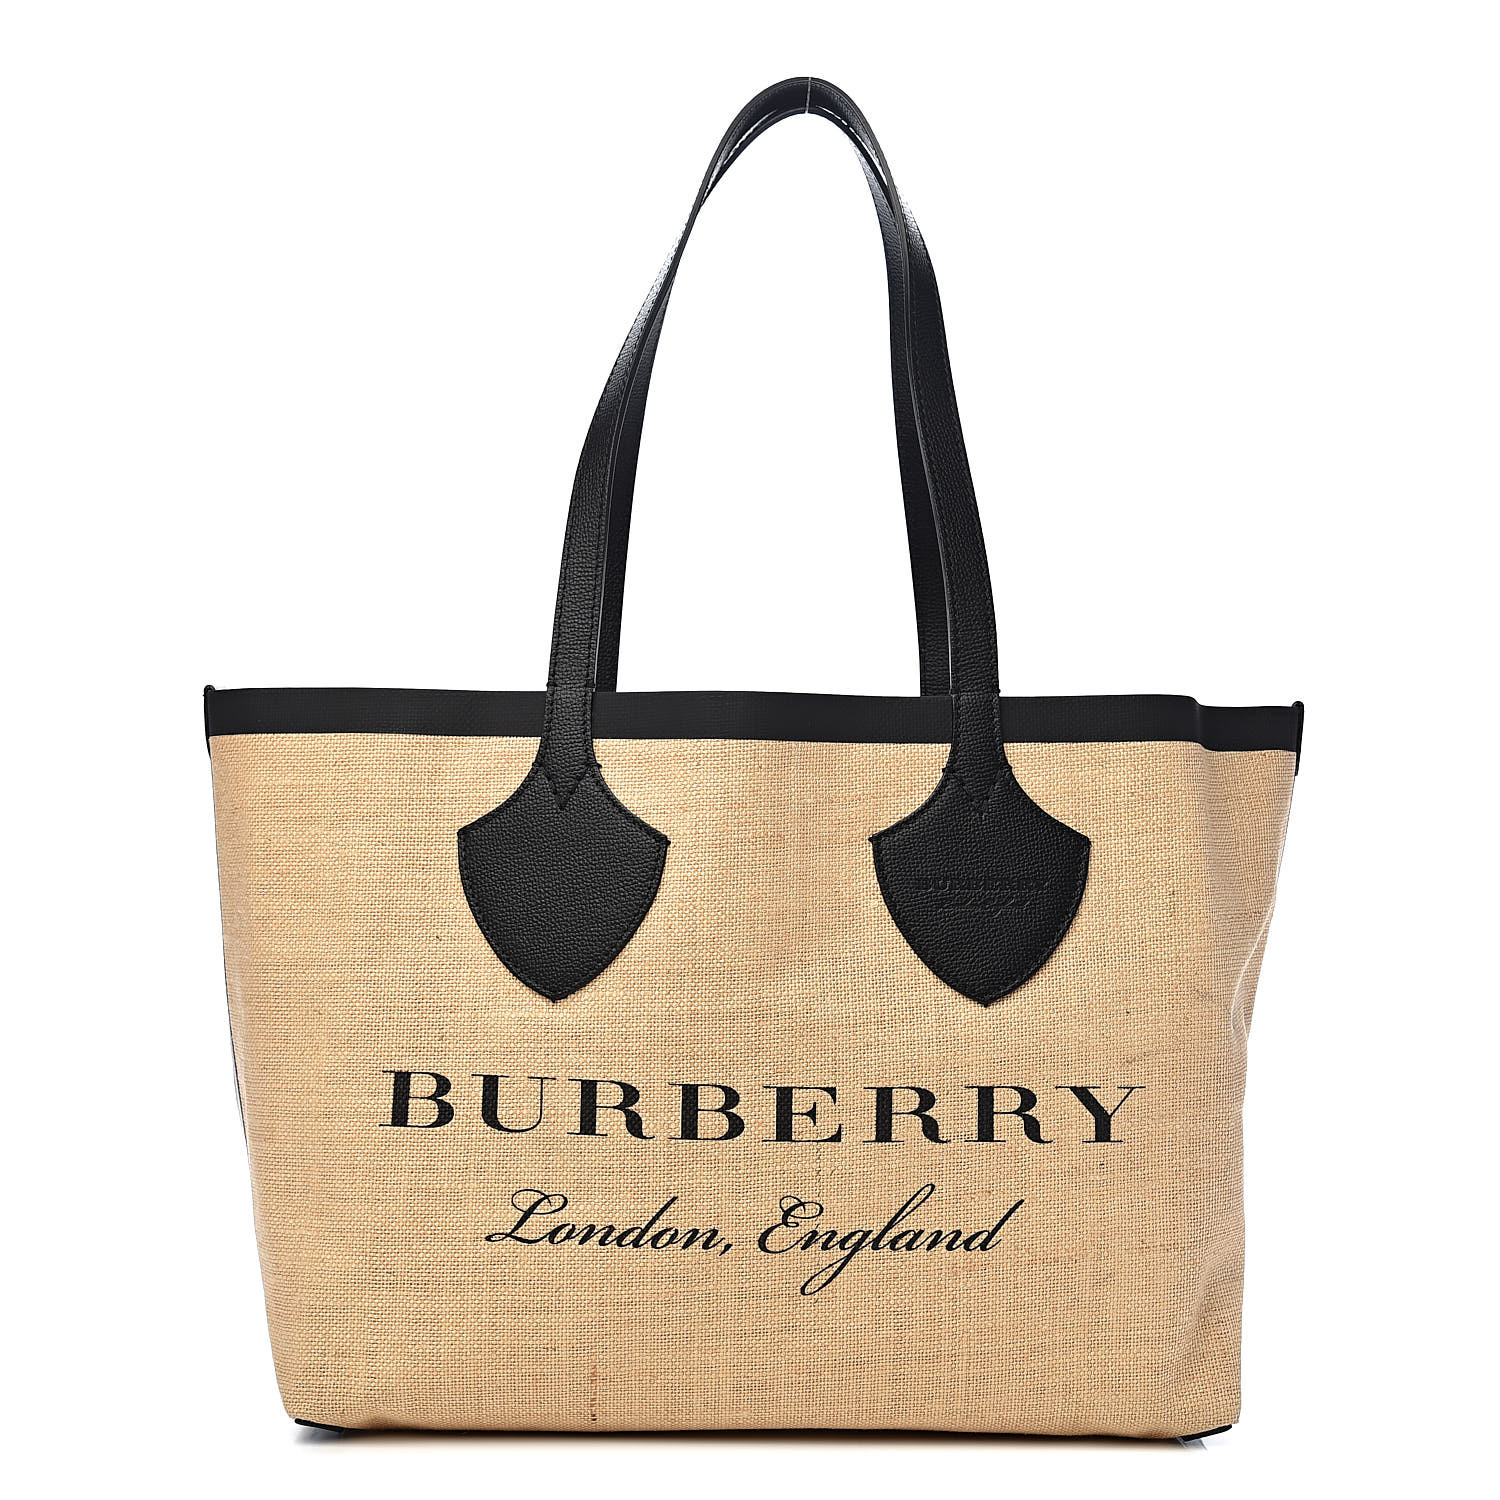 burberry tote bag black